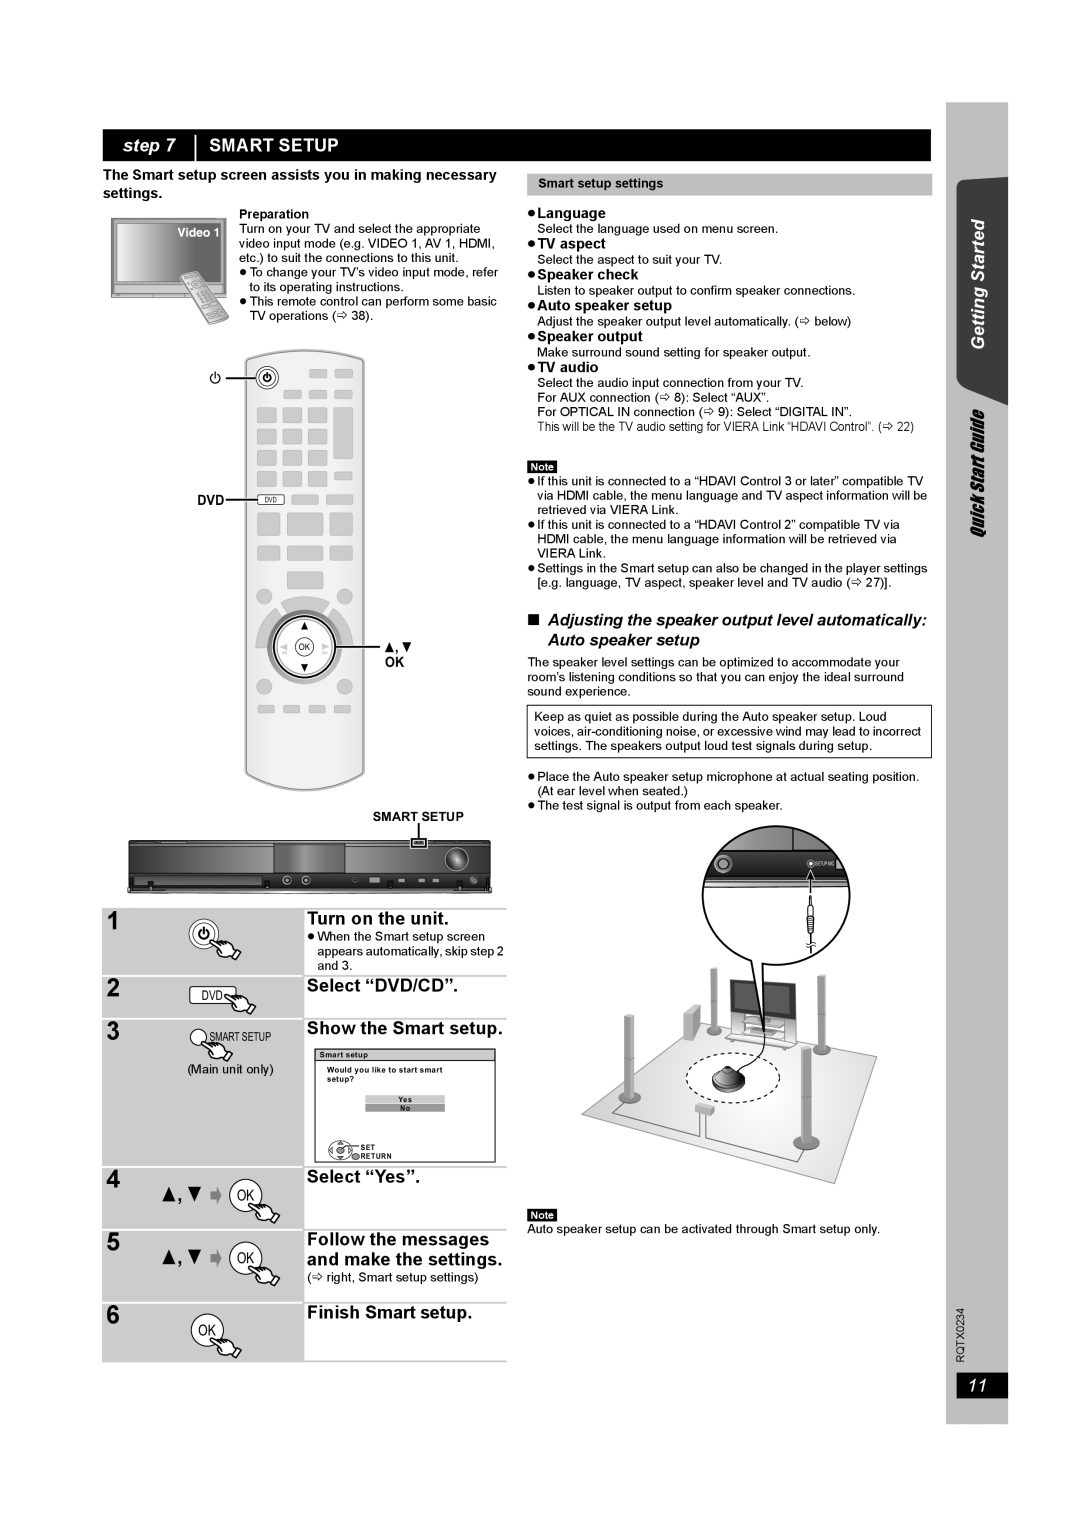 Panasonic SC-PT875 1 2 3, Smart Setup, Turn on the unit, Select “DVD/CD” Show the Smart setup, Select “Yes” 